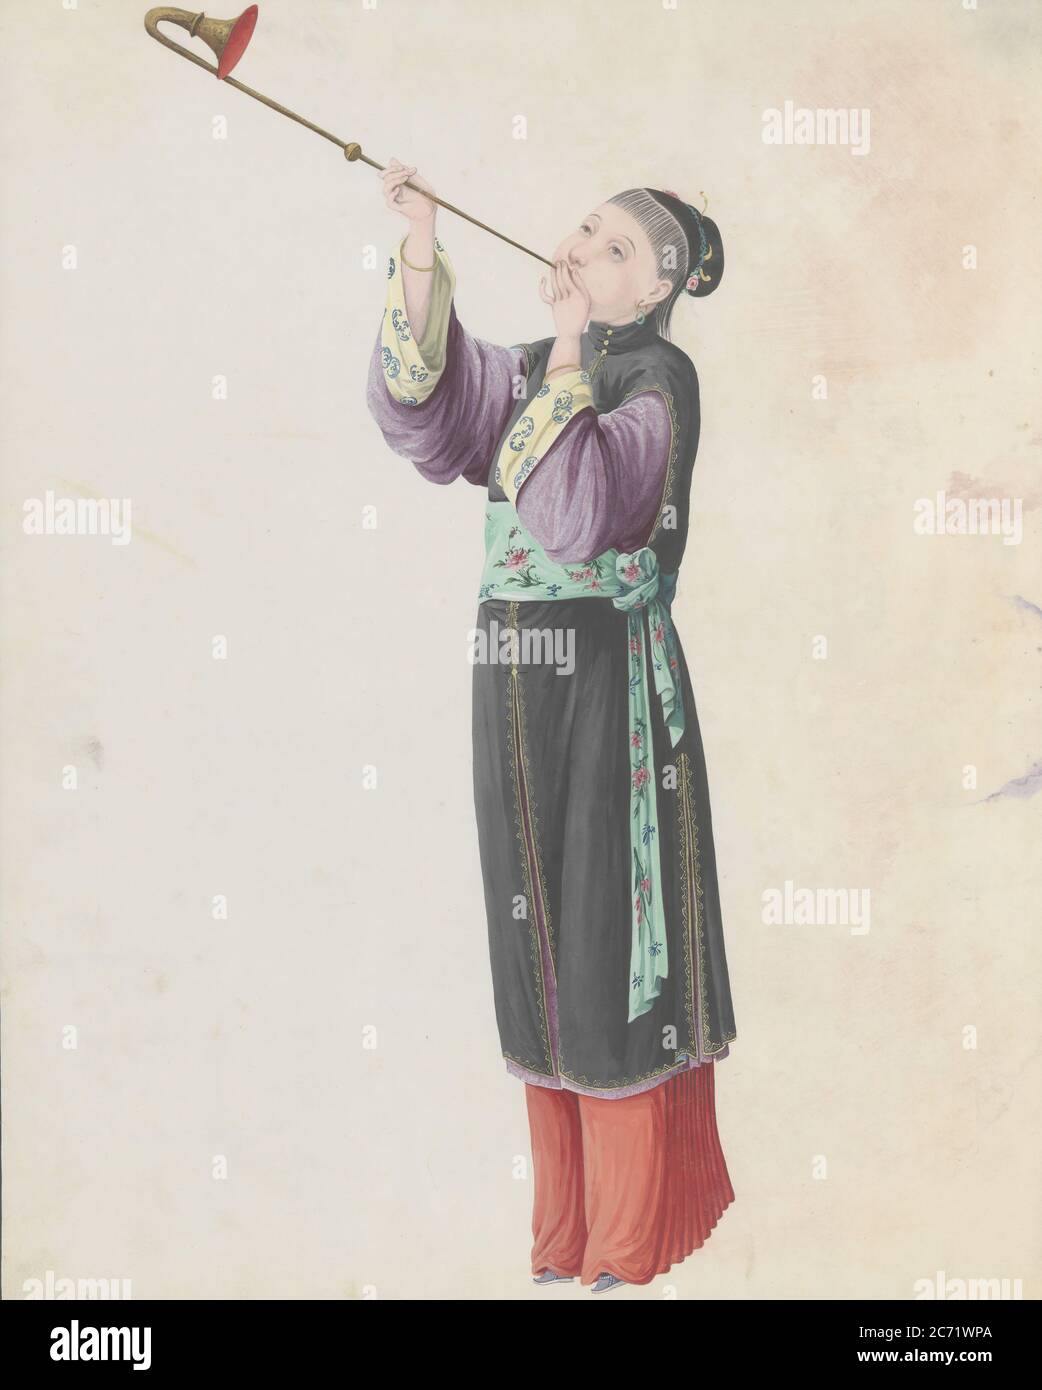 Aquarell des Musikers, der Laba spielt, Ende des 18. Jahrhunderts. Stockfoto